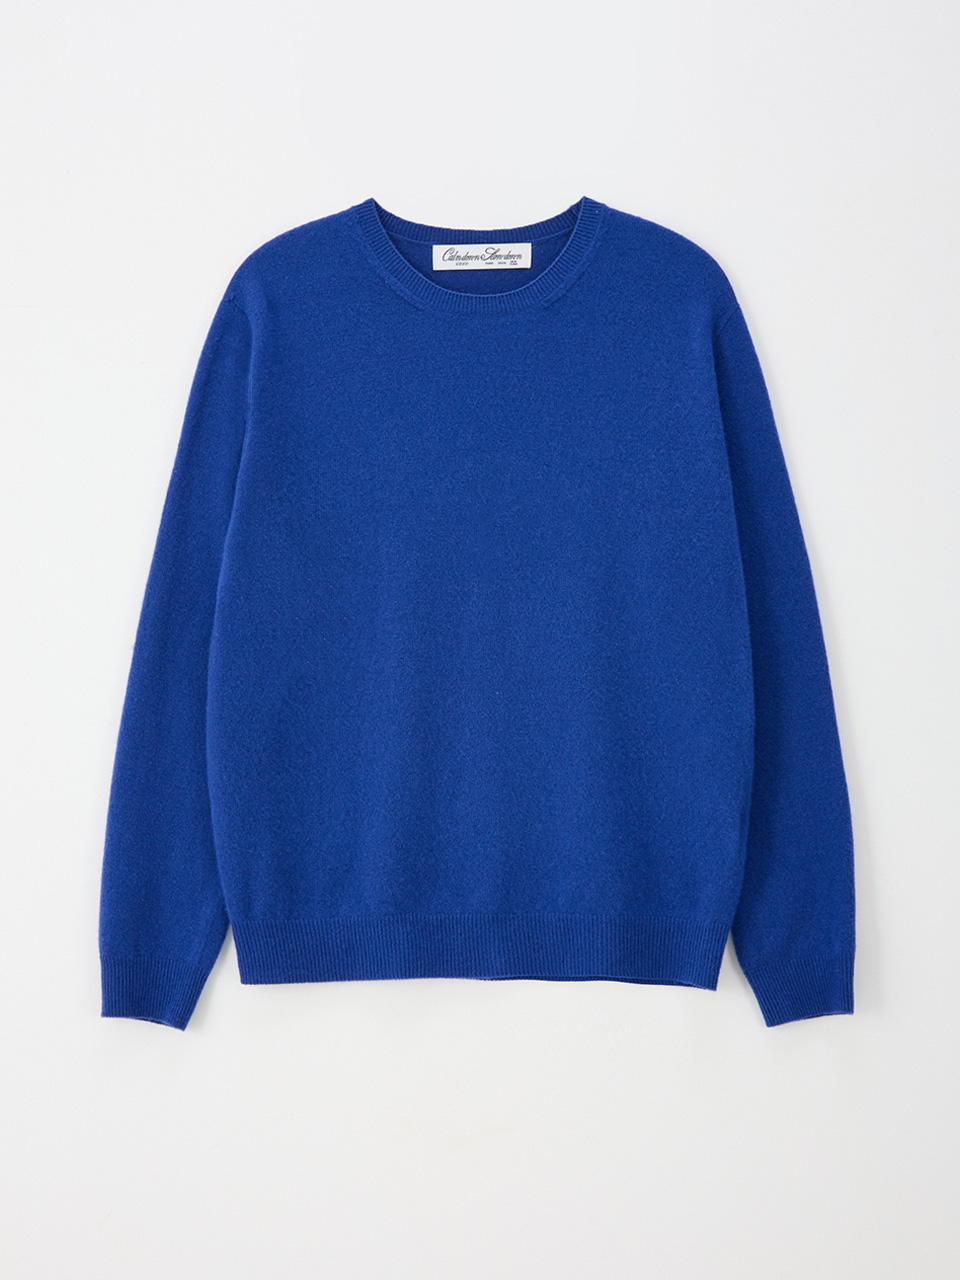 Wool cashmere crew-neck knit_royal blue